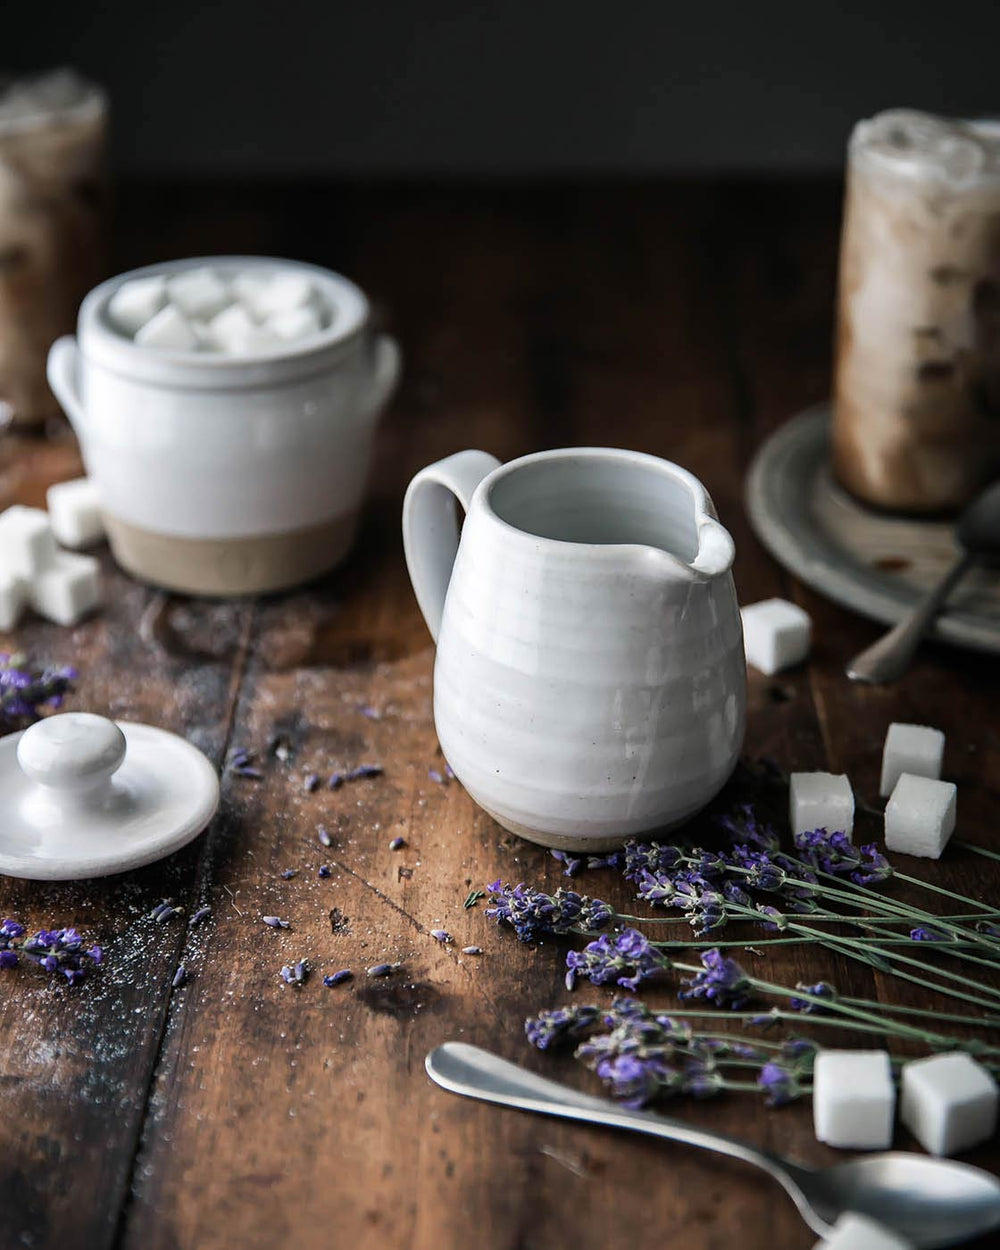 Barnyard Designs Ceramic Stoneware Sugar Creamer Set, 11oz Creamer